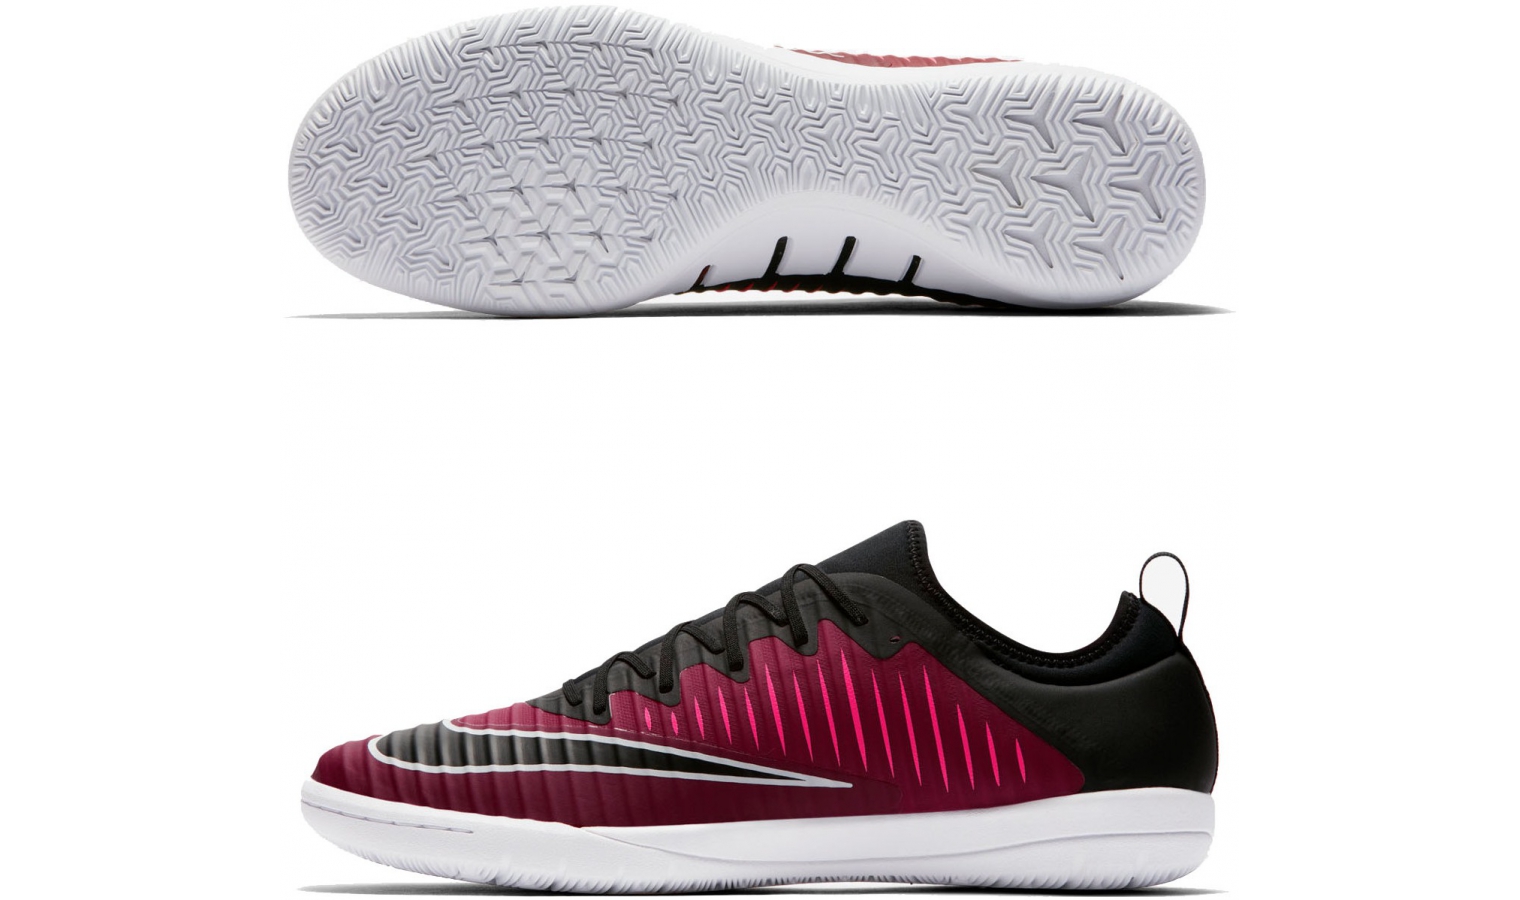 Nike TiempoX Ligera IV 10R IC Indoor Soccer Shoes (Black